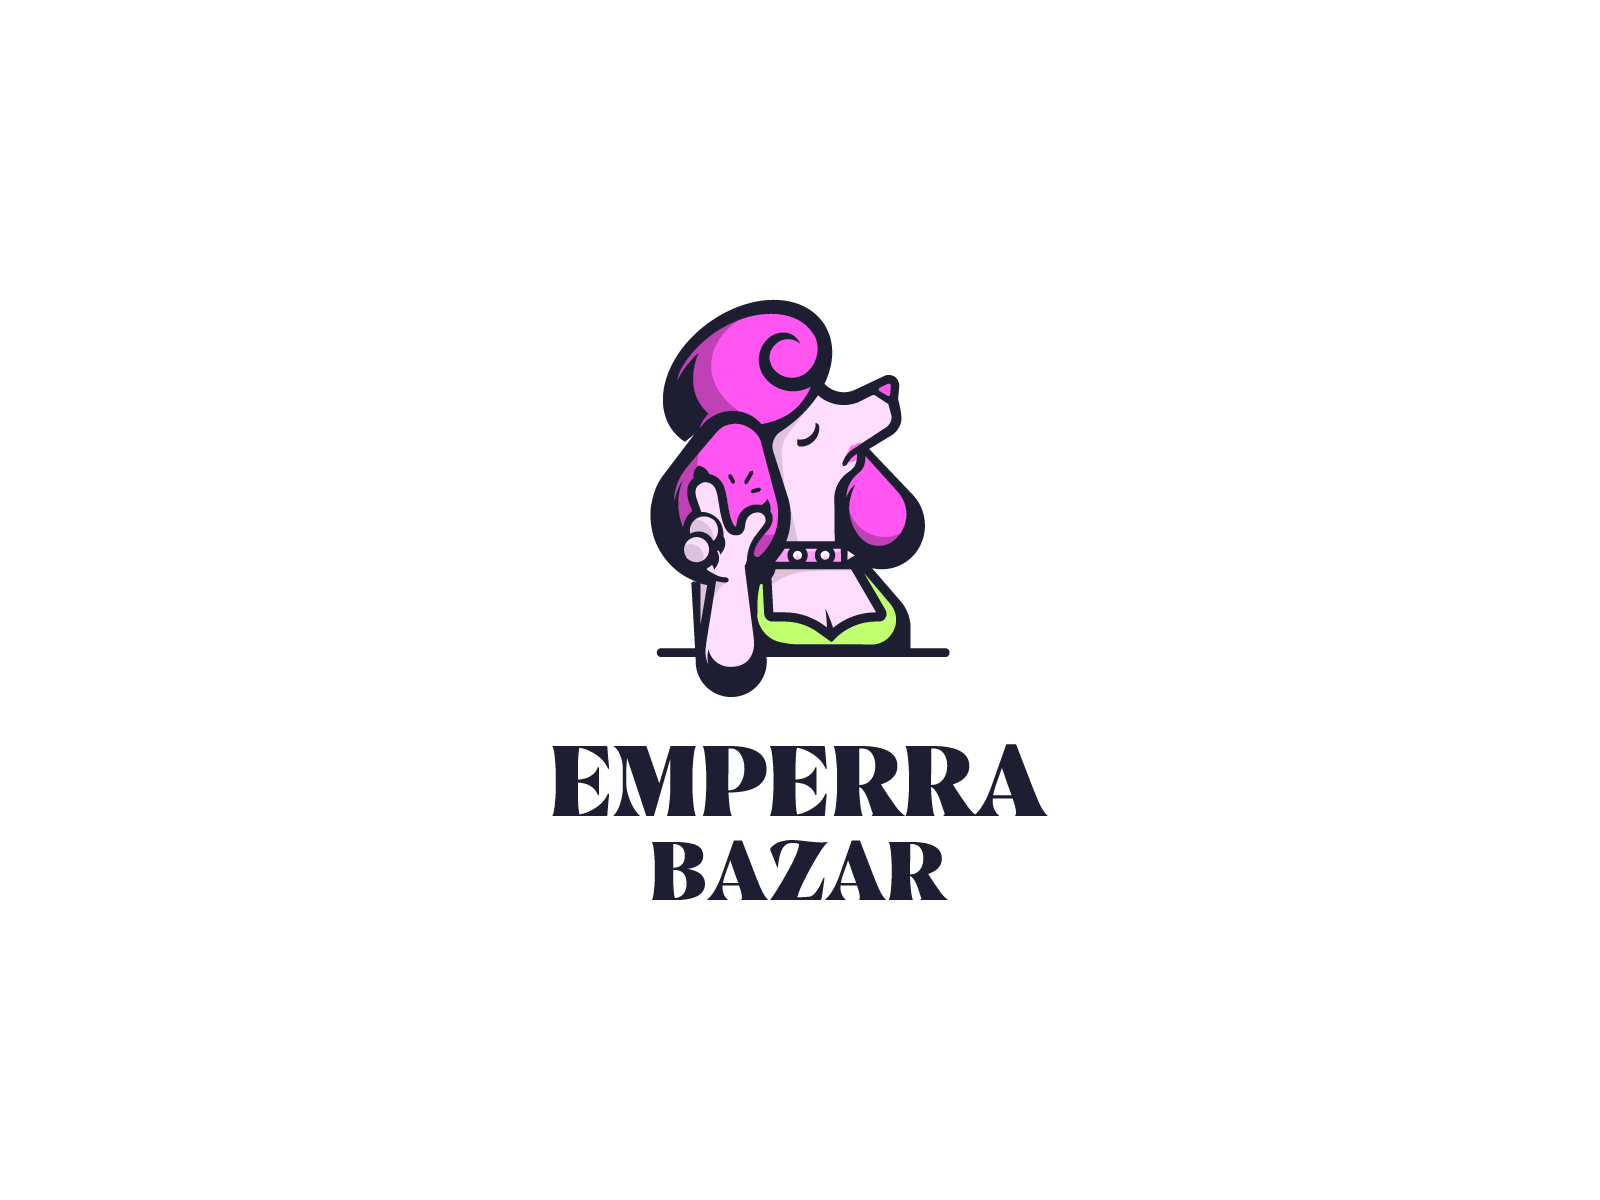 Emperra Bazar by Ivan Aguilar on Dribbble